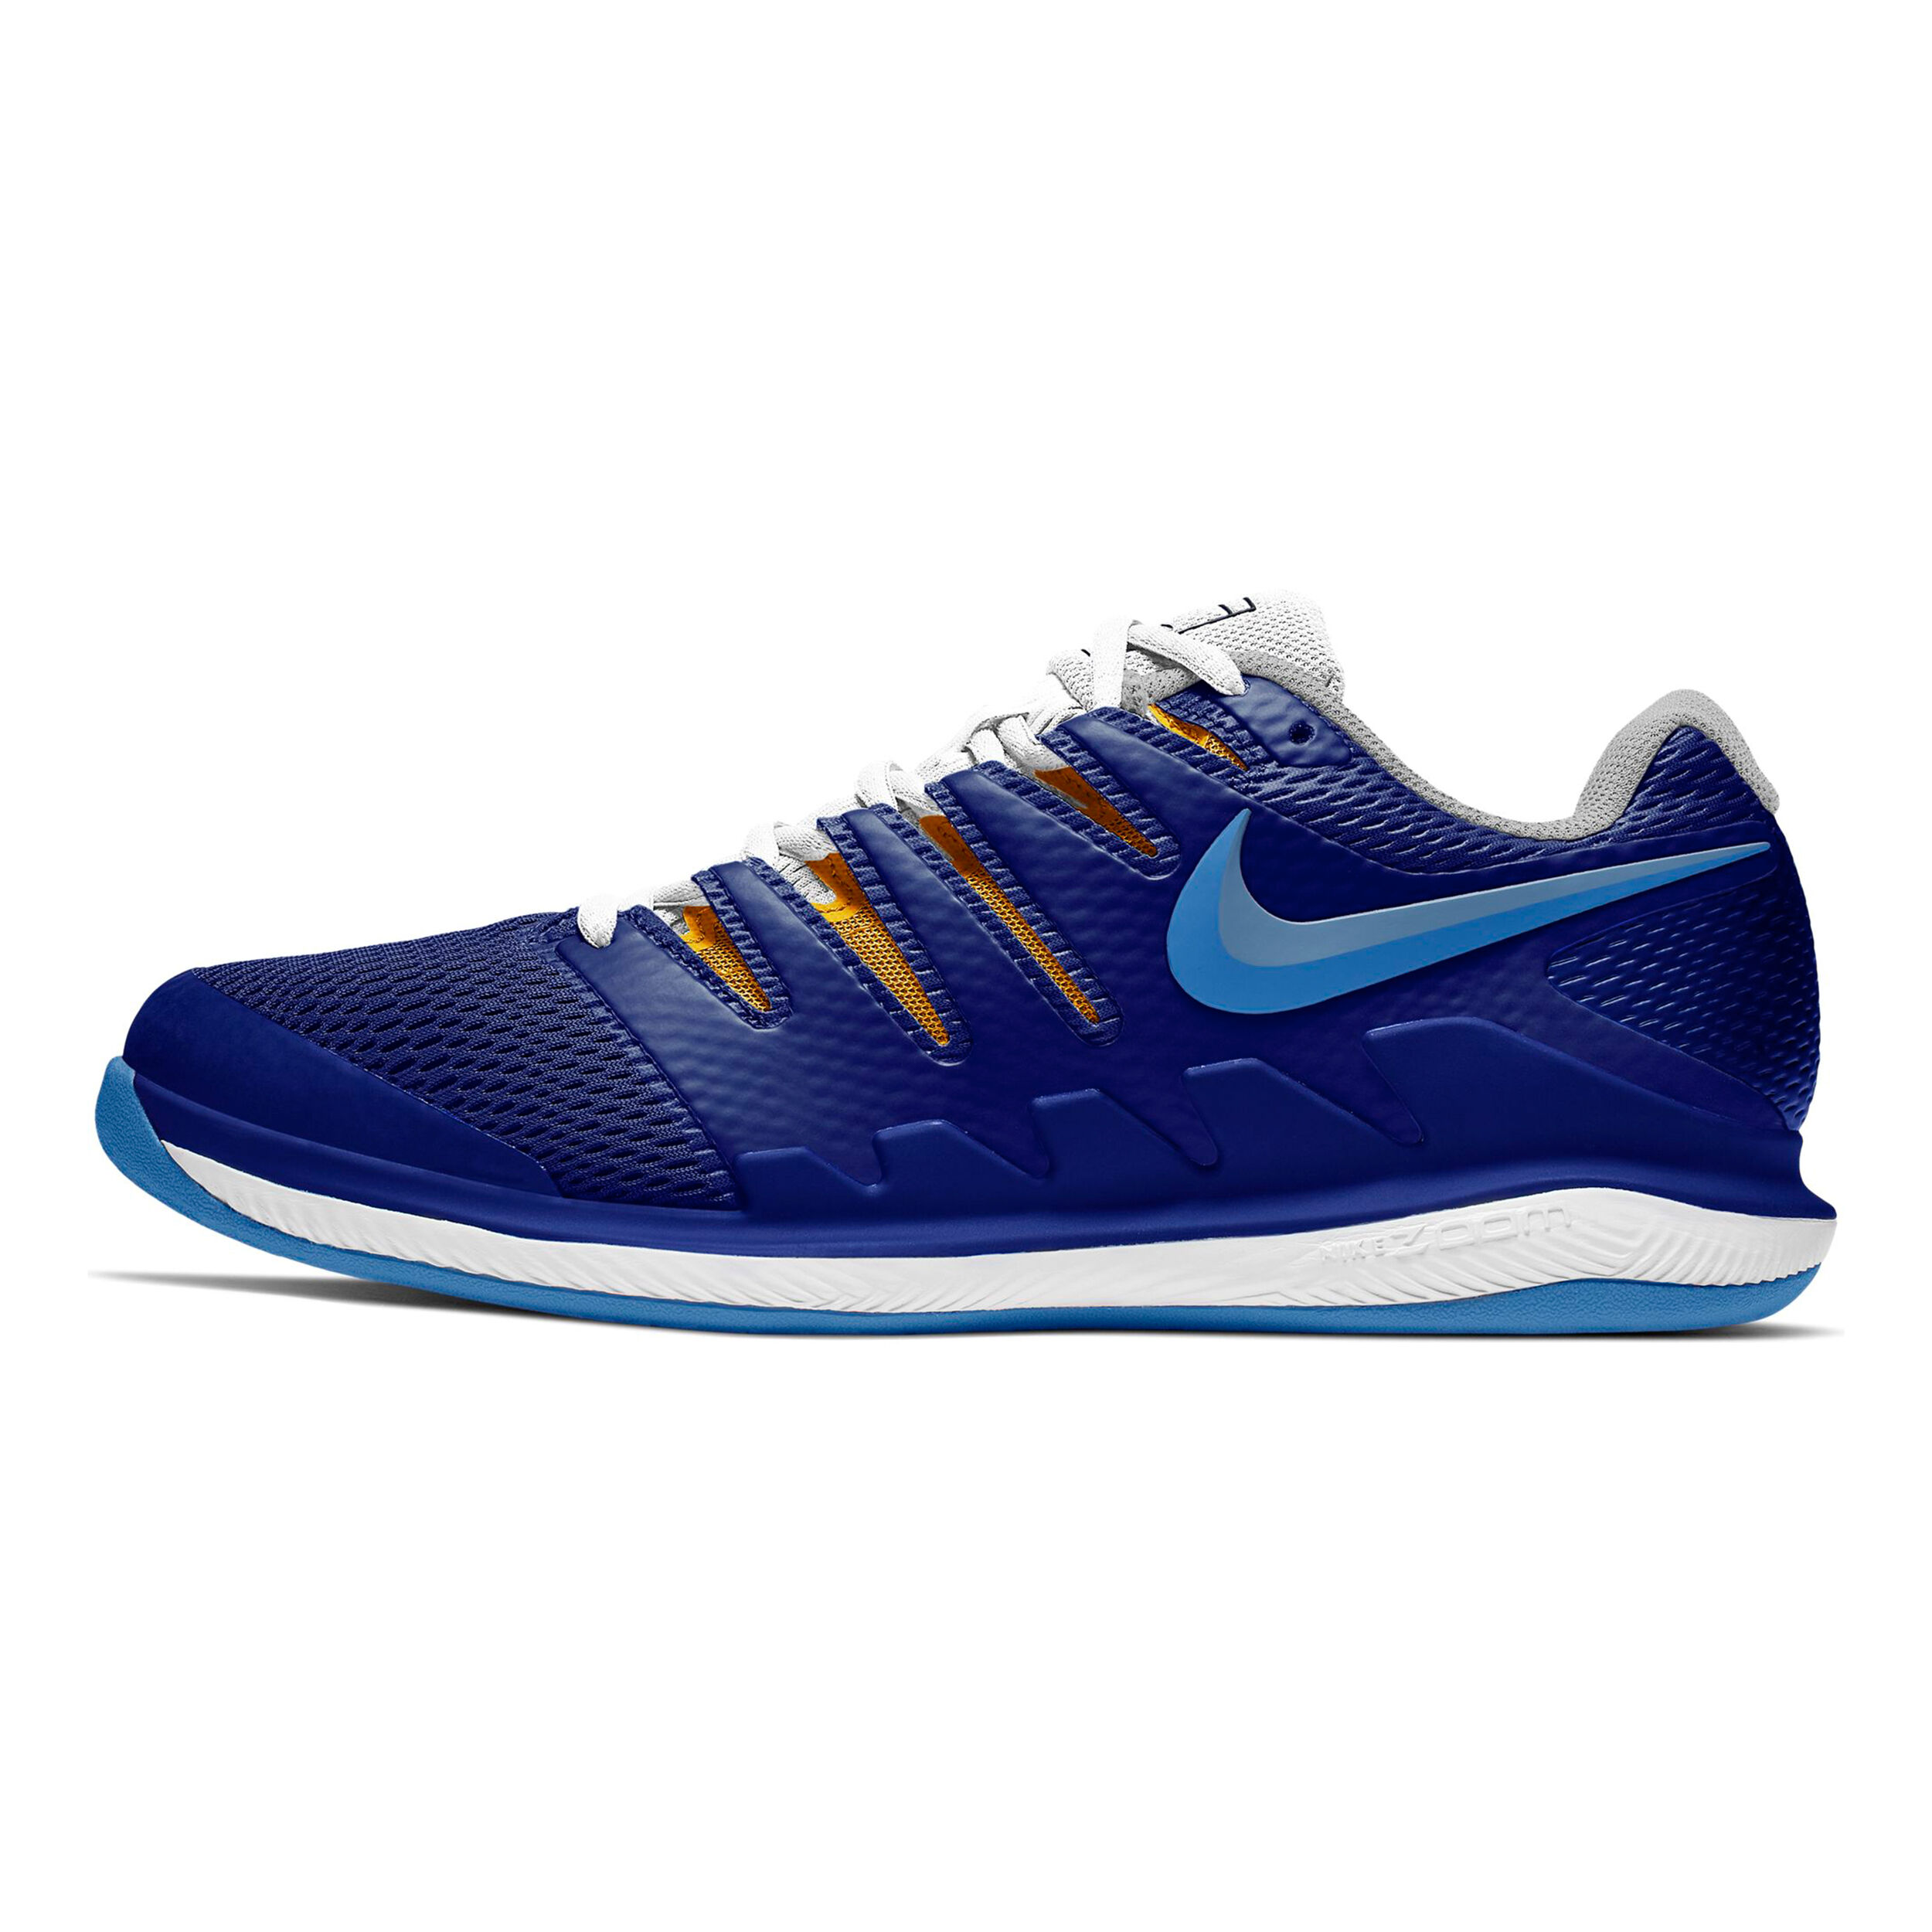 buy Nike Air Zoom Vapor 10 Carpet Shoe Men - Blue, Light Blue ... دوتس جدة